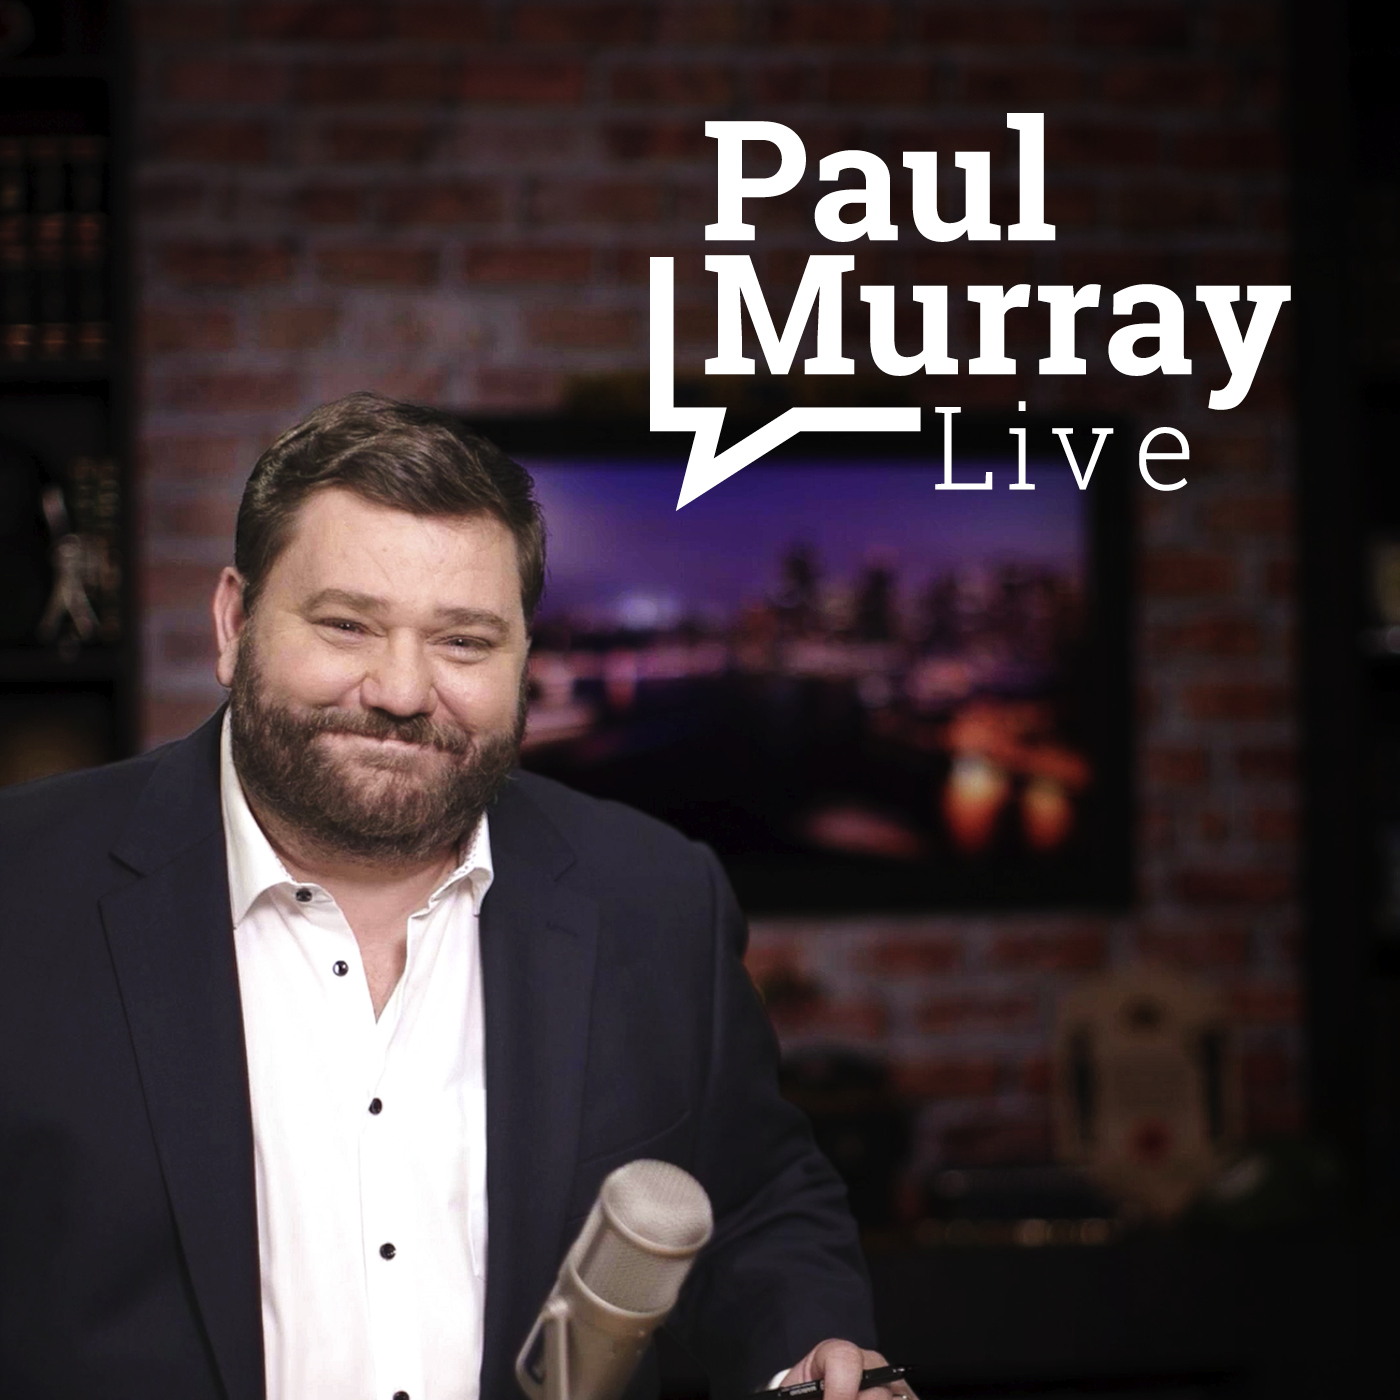 Paul Murray Live, Monday 30 January